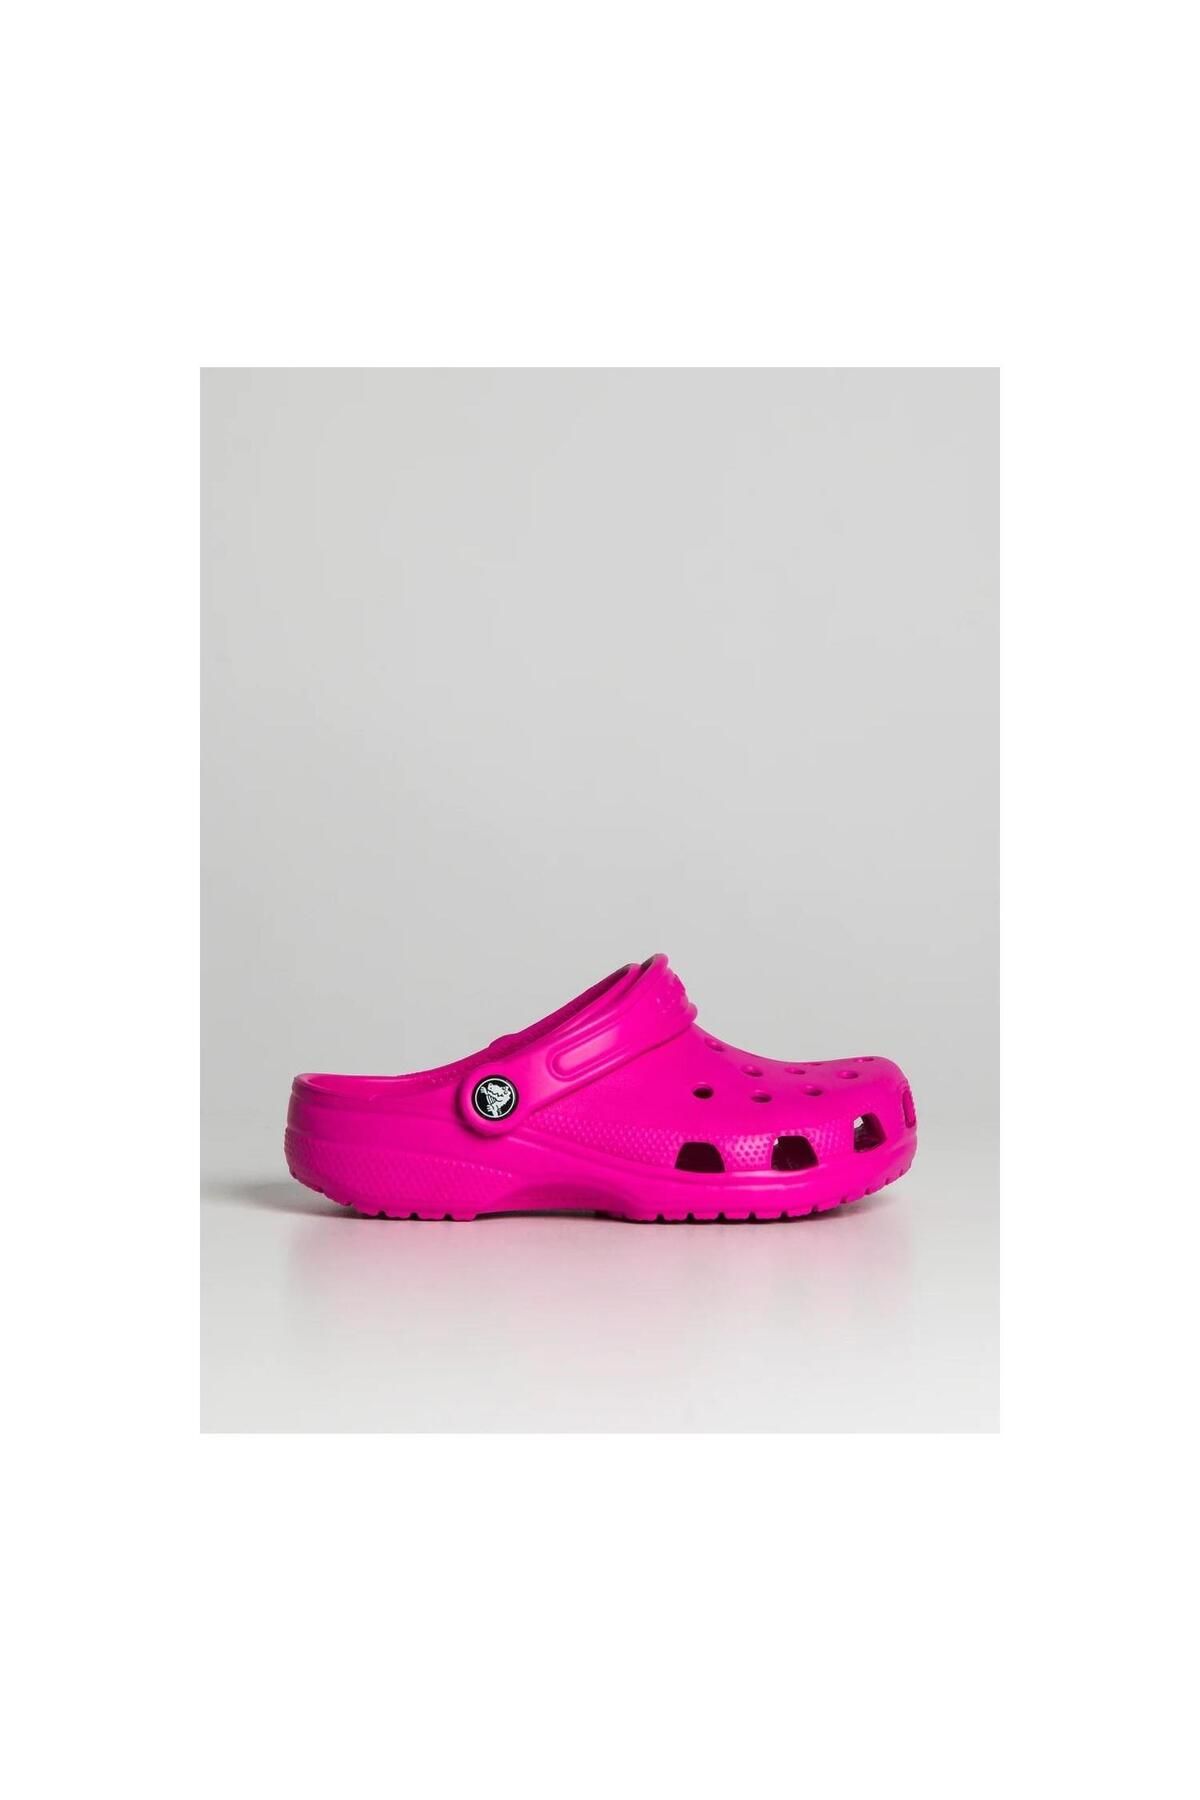 Crocs Classic Clog   Spor Sandalet